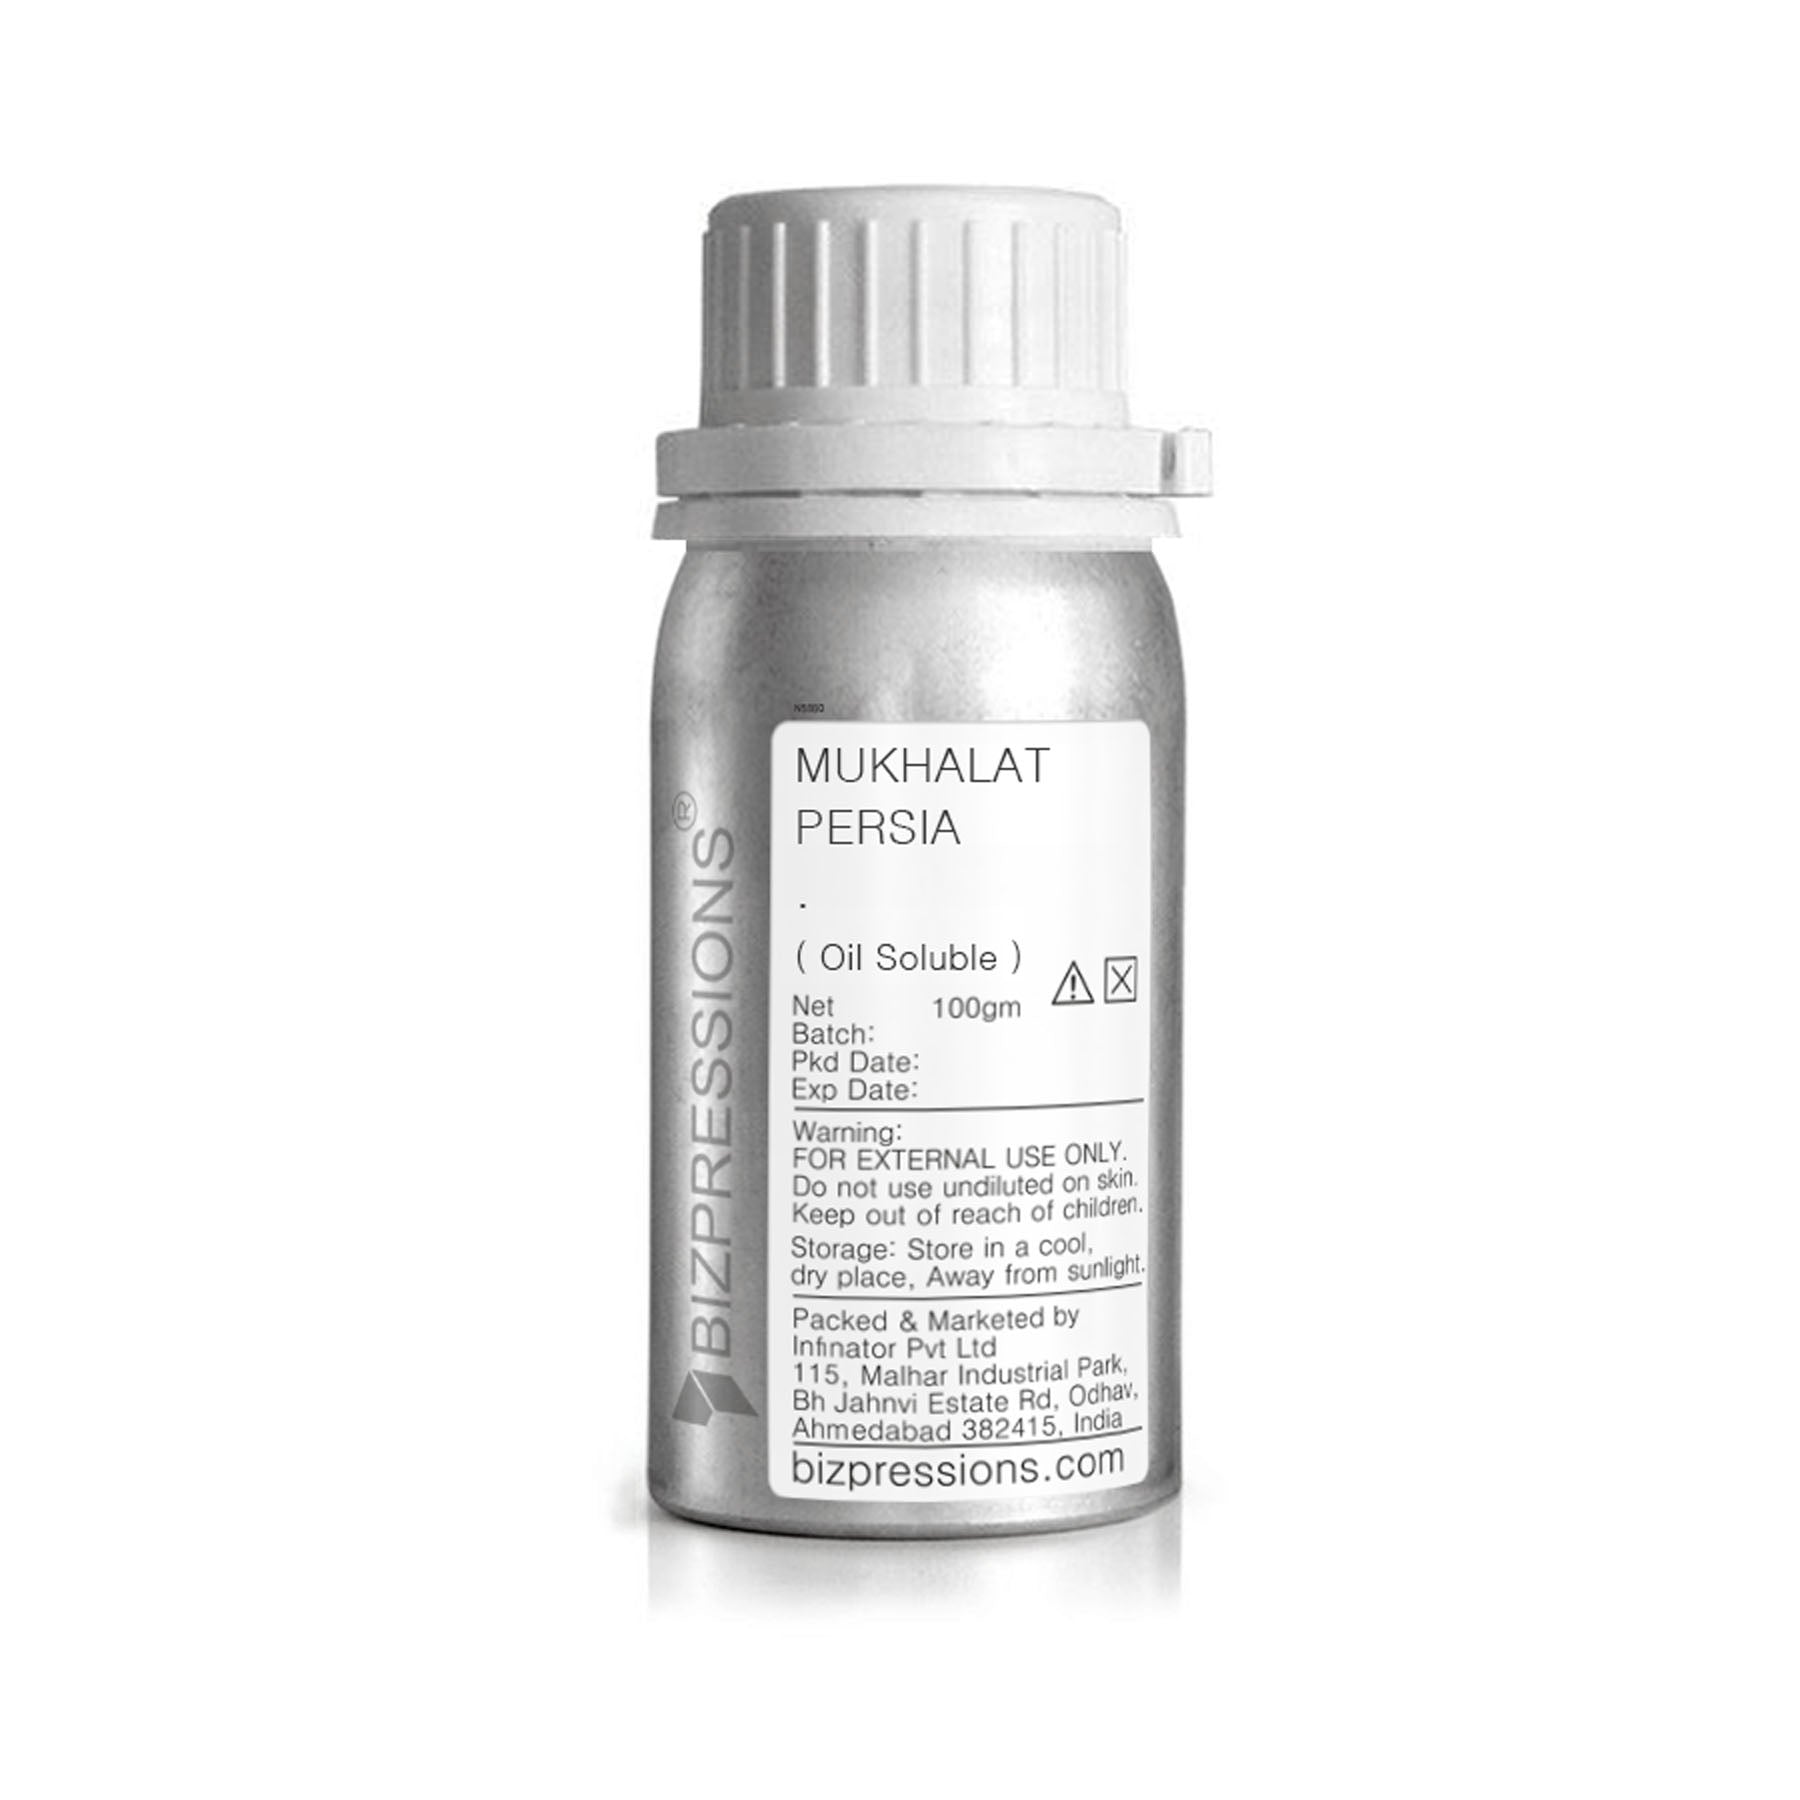 MUKHALAT PERSIA - Fragrance ( Oil Soluble ) - 100 gm